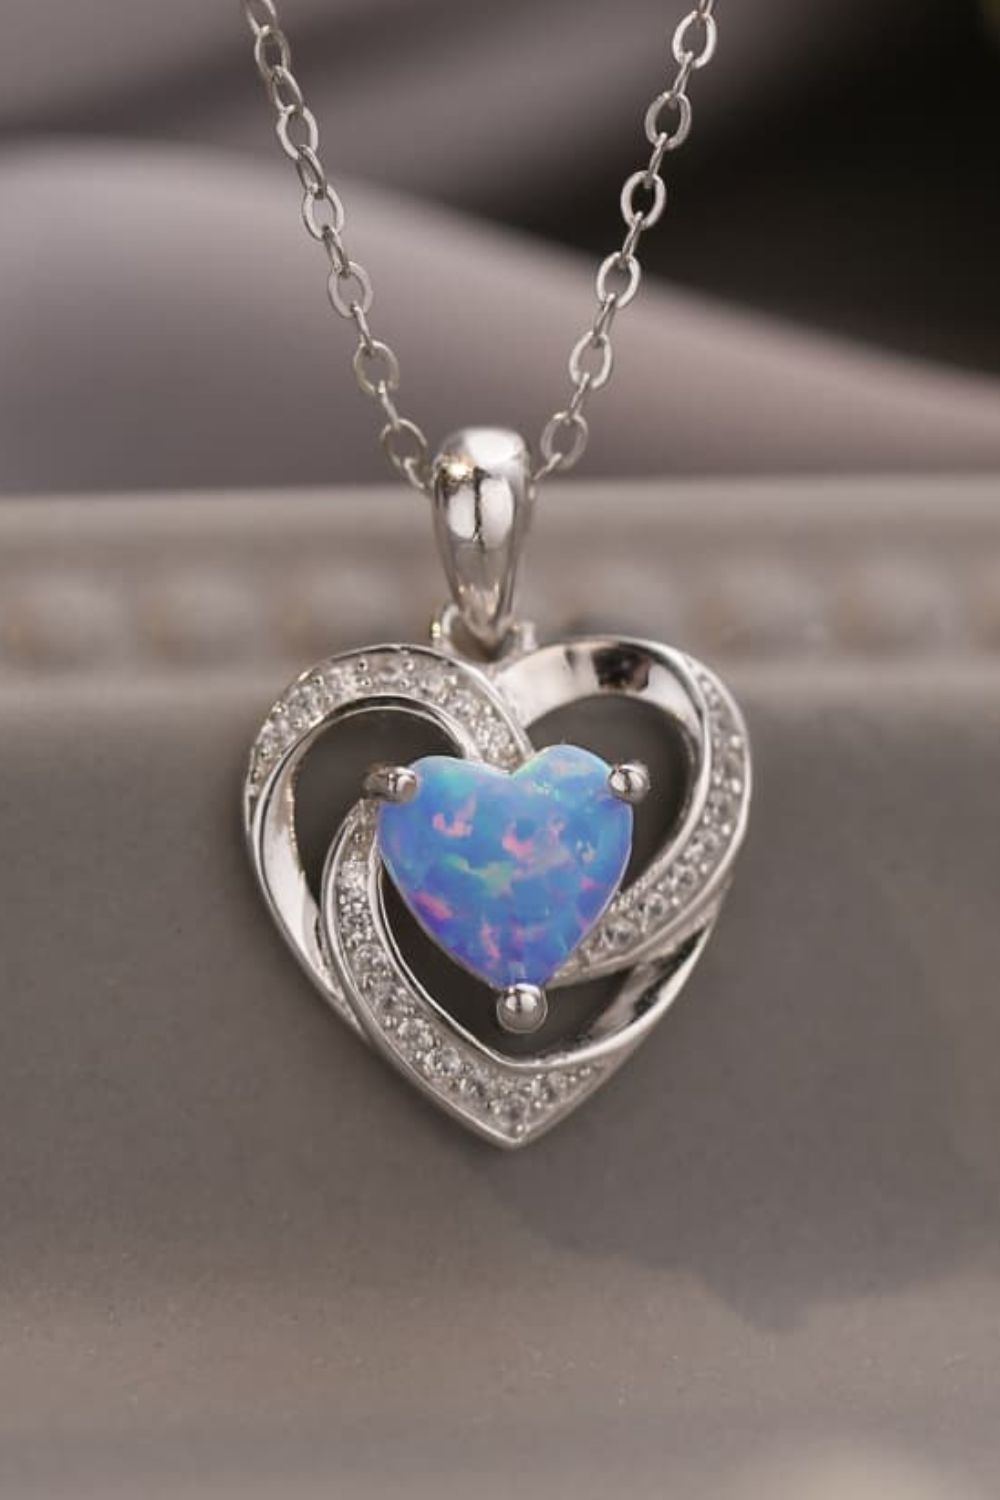 Opal Heart Pendant Necklace - Shop women apparel, Jewelry, bath & beauty products online - Arwen's Boutique